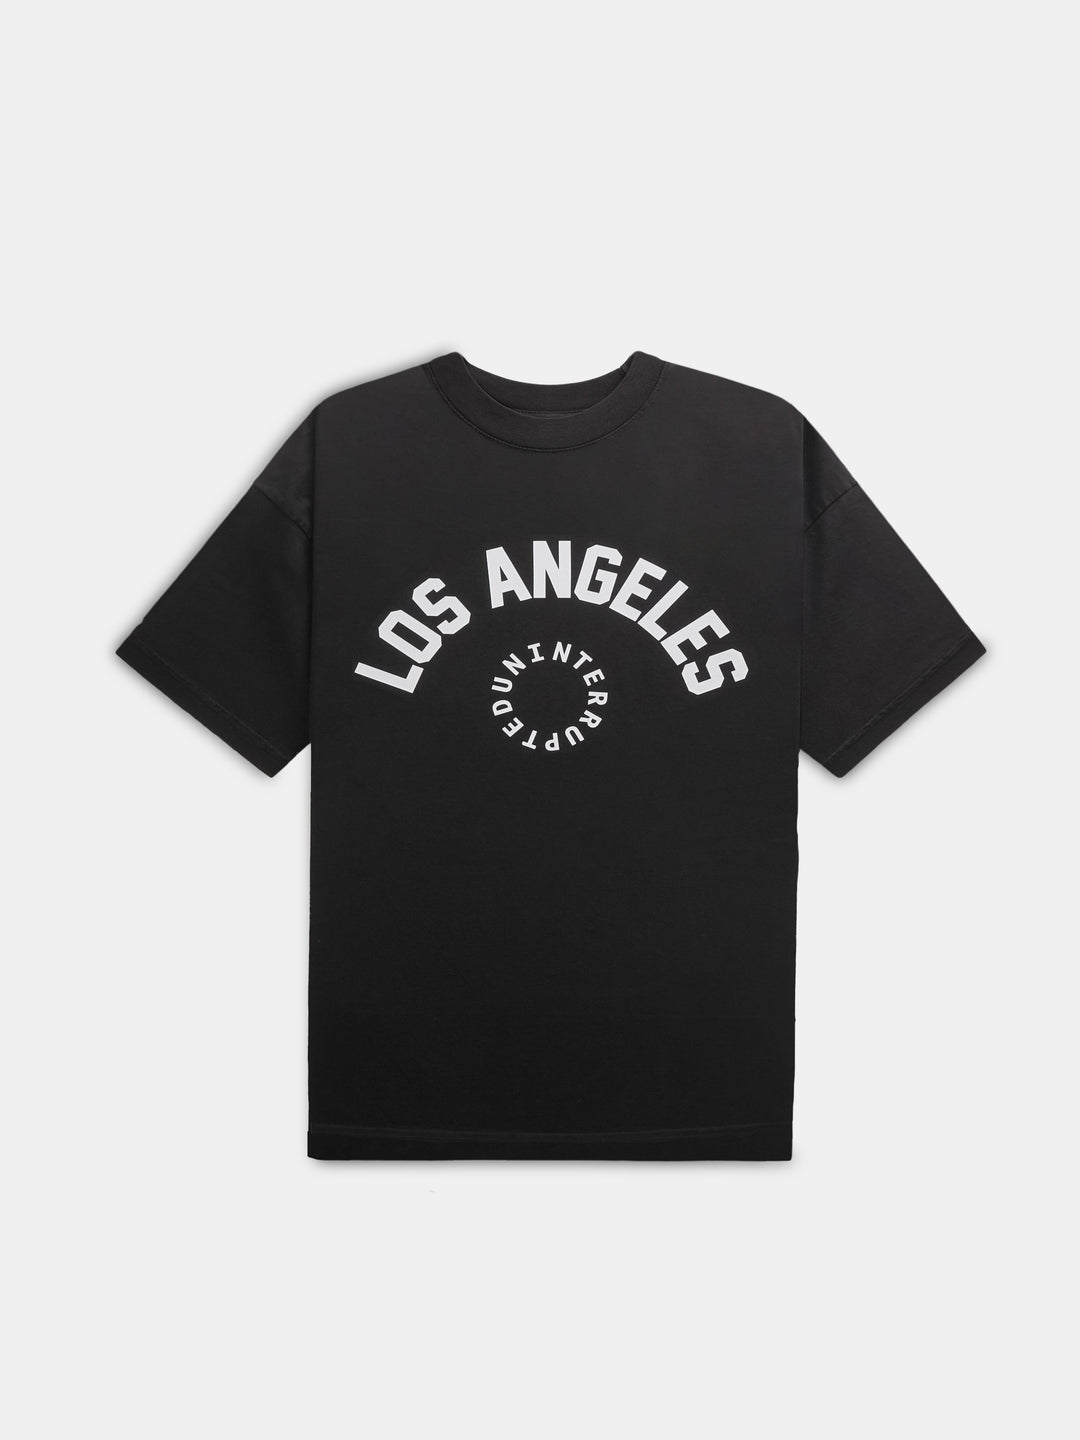 Los Angeles Circle Logo Tee Black